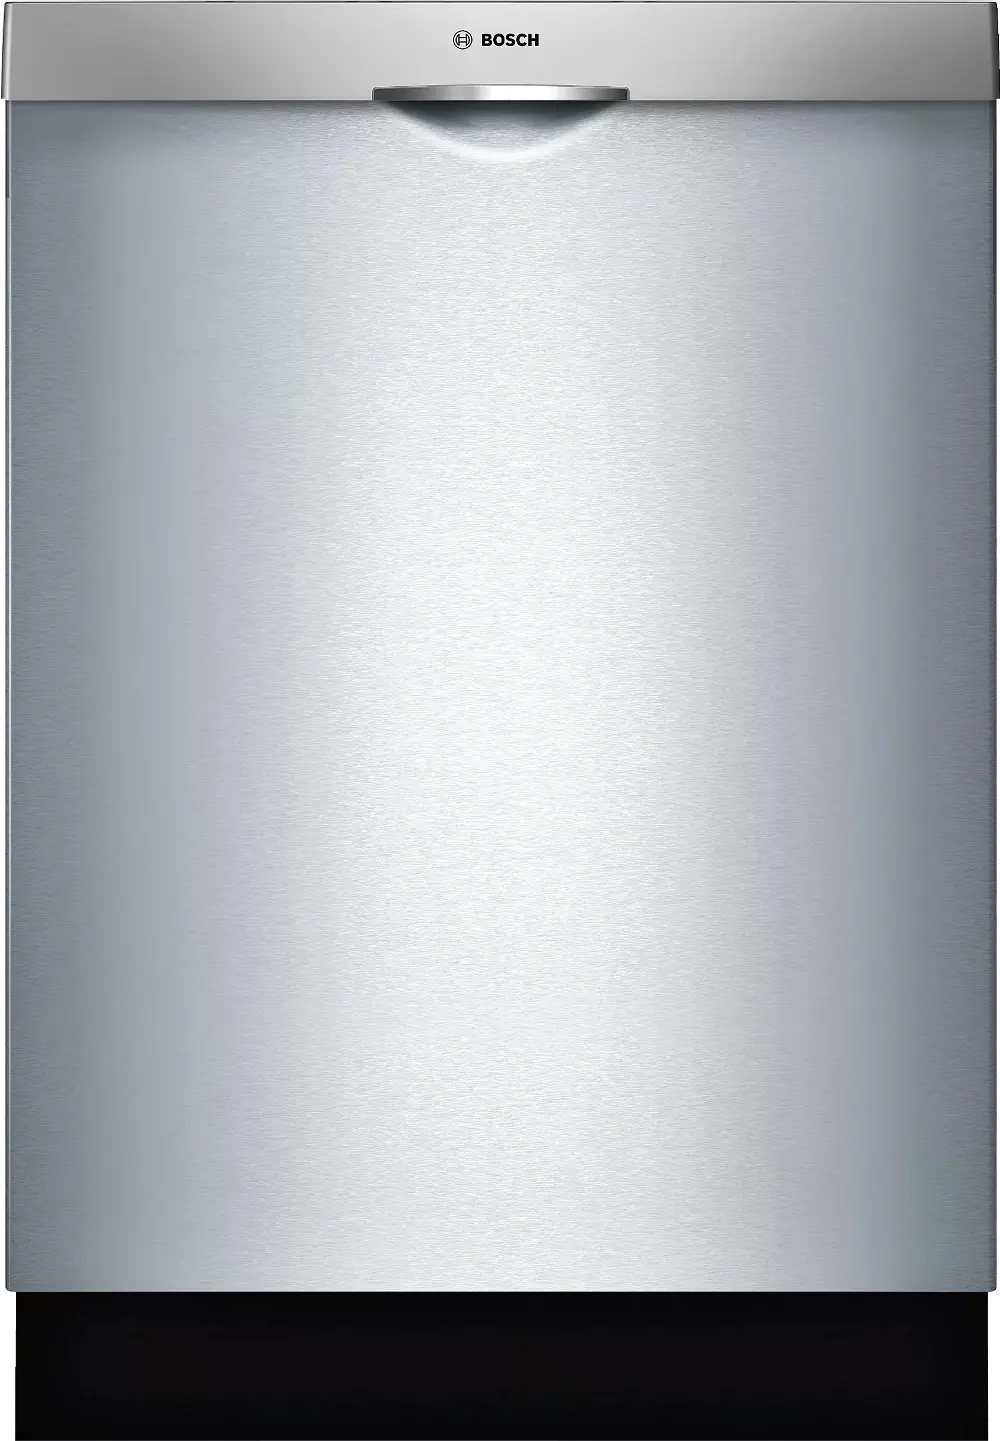 SHSM63W55N Bosch 300 Top Control Dishwasher - Stainless Steel-1